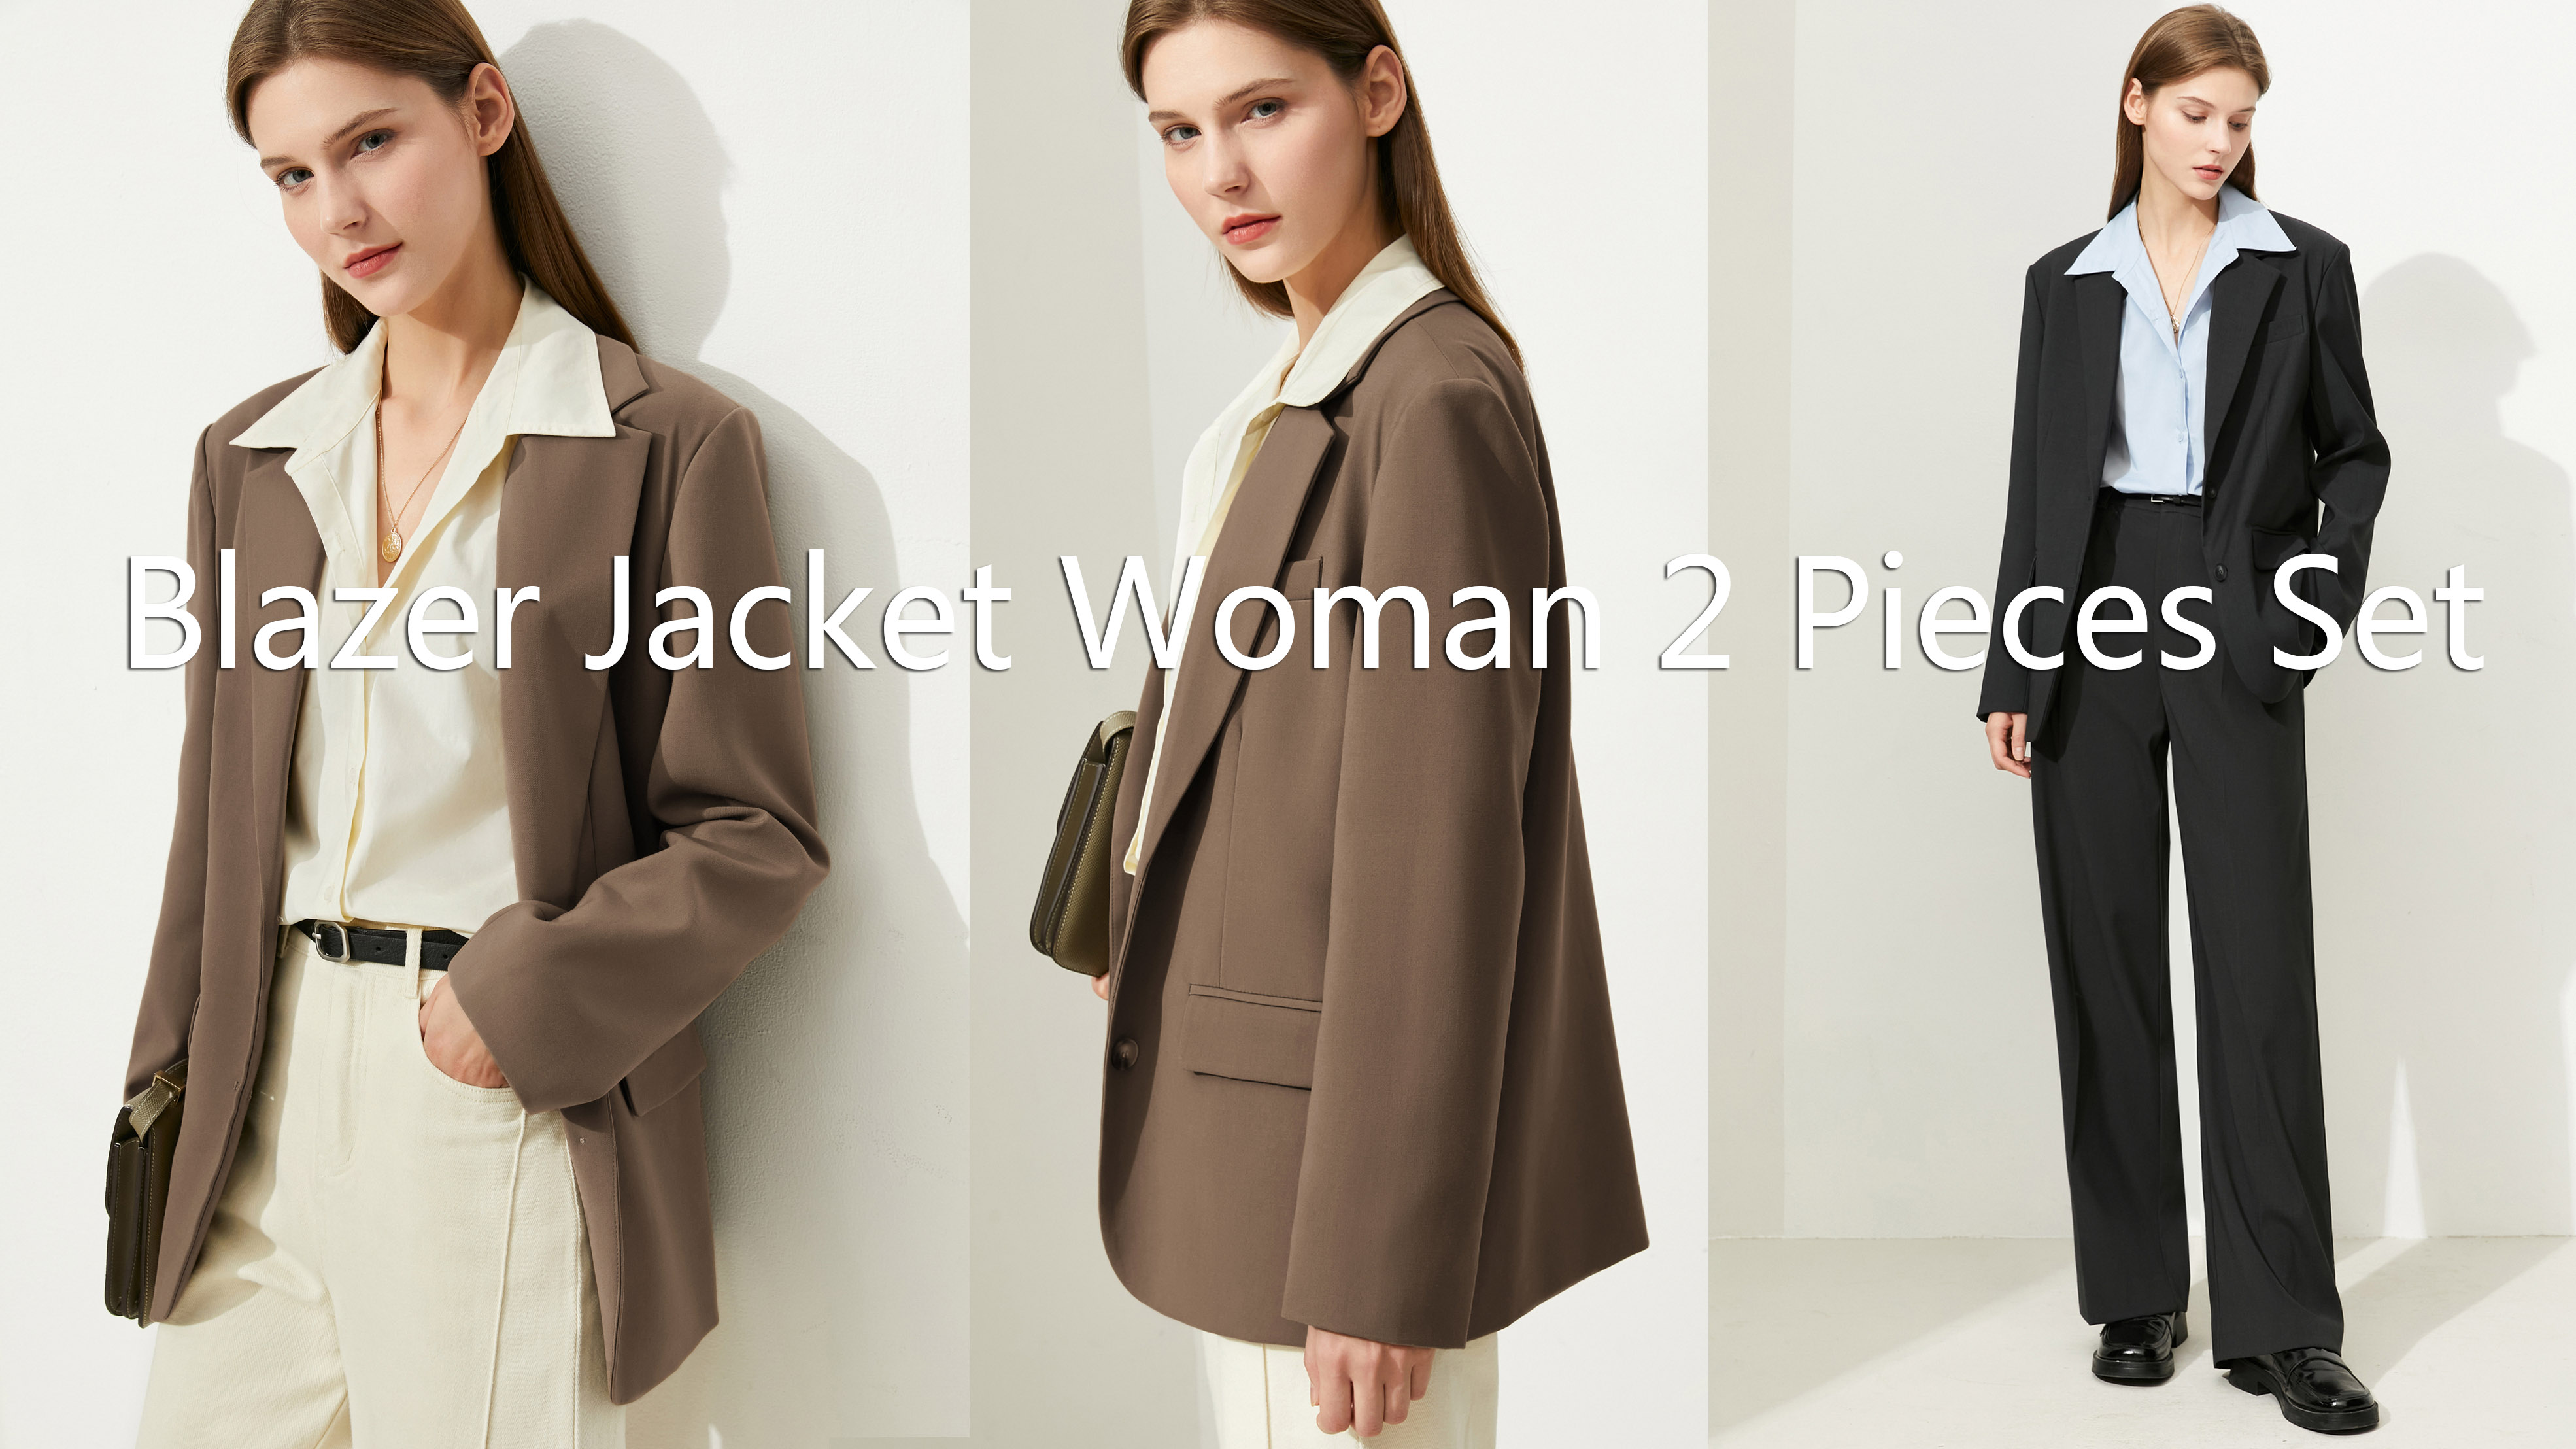 Quality Blazer Jacket Woman 2 Pieces Set Manufacturer |Auschalink